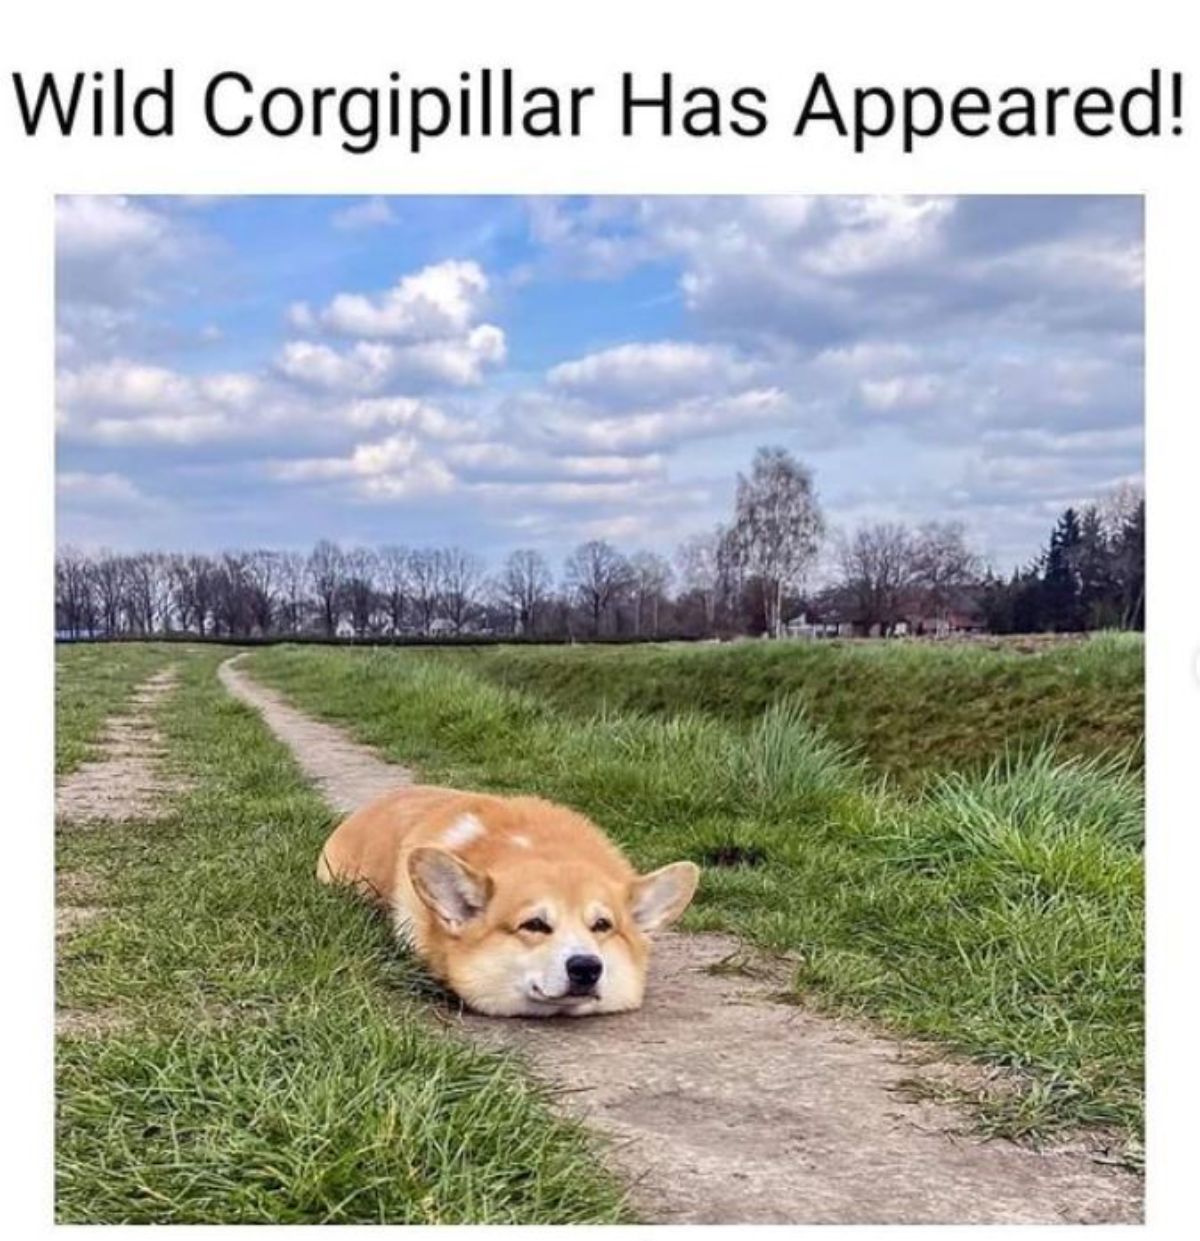 a corgi lying on the floor photo with a text "Wildcorgipillar has appeared!"